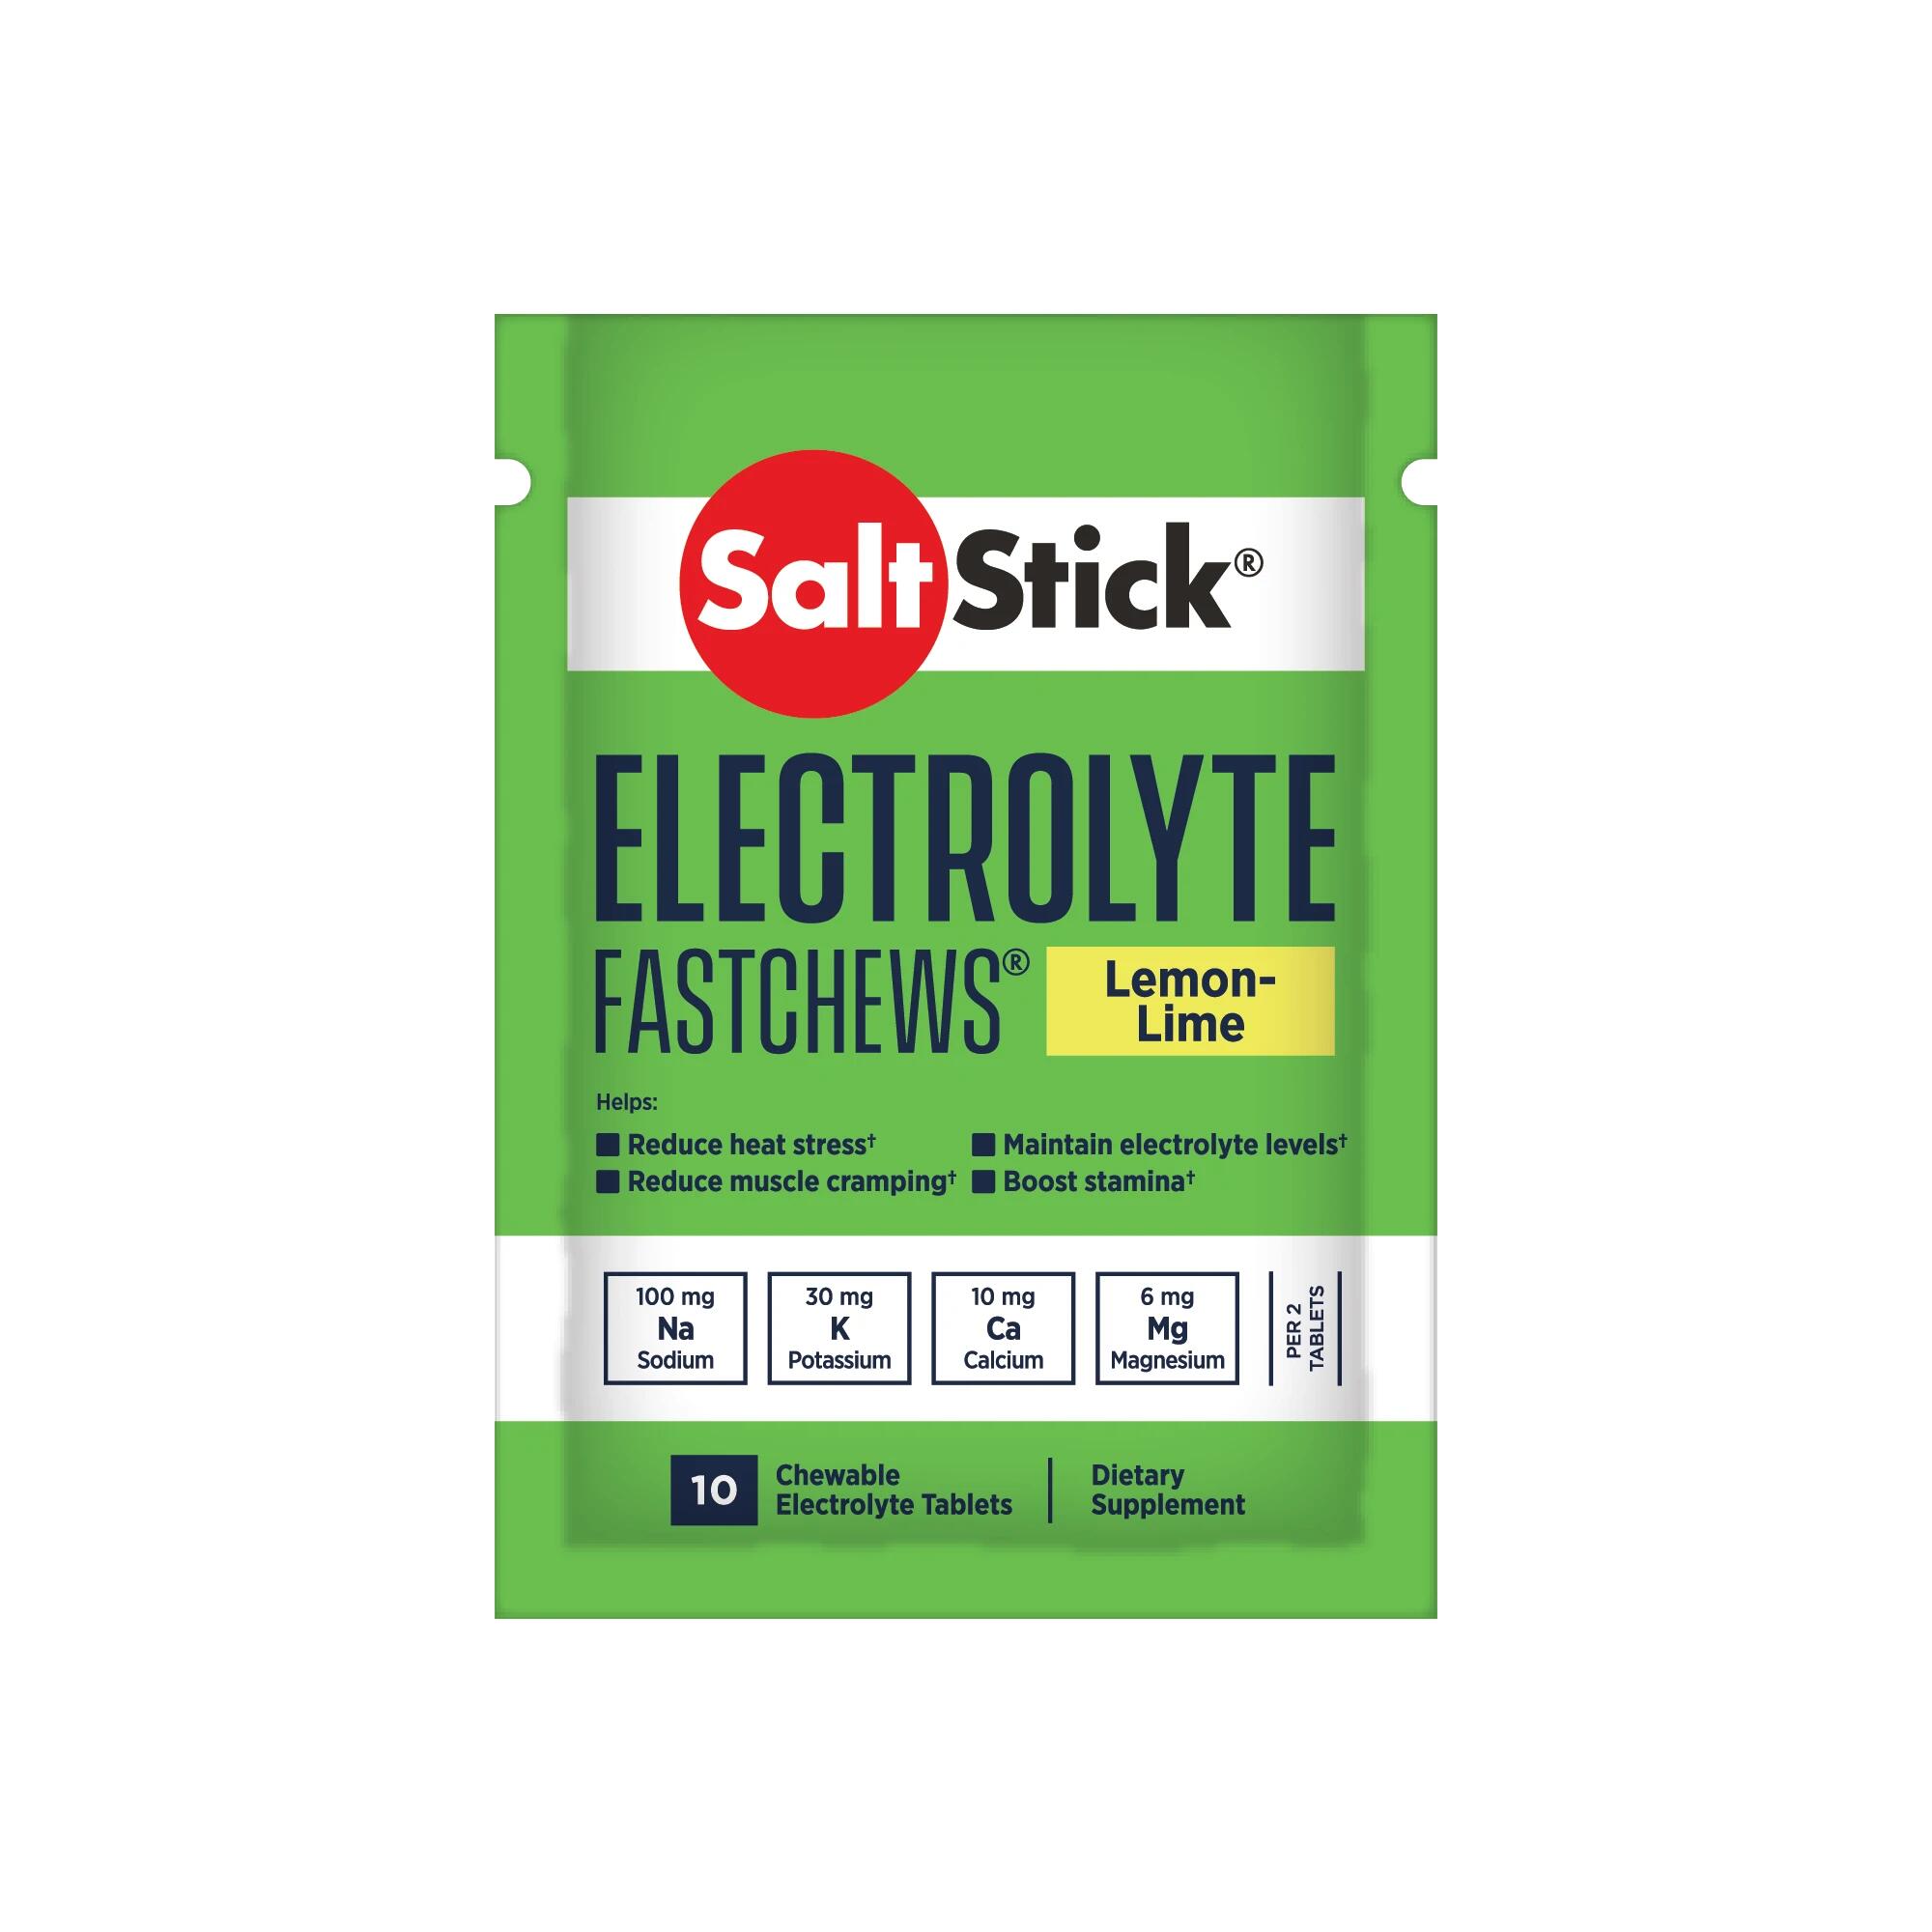 SALTSTICK Electrolyte FastChews - Box of 12 Packs